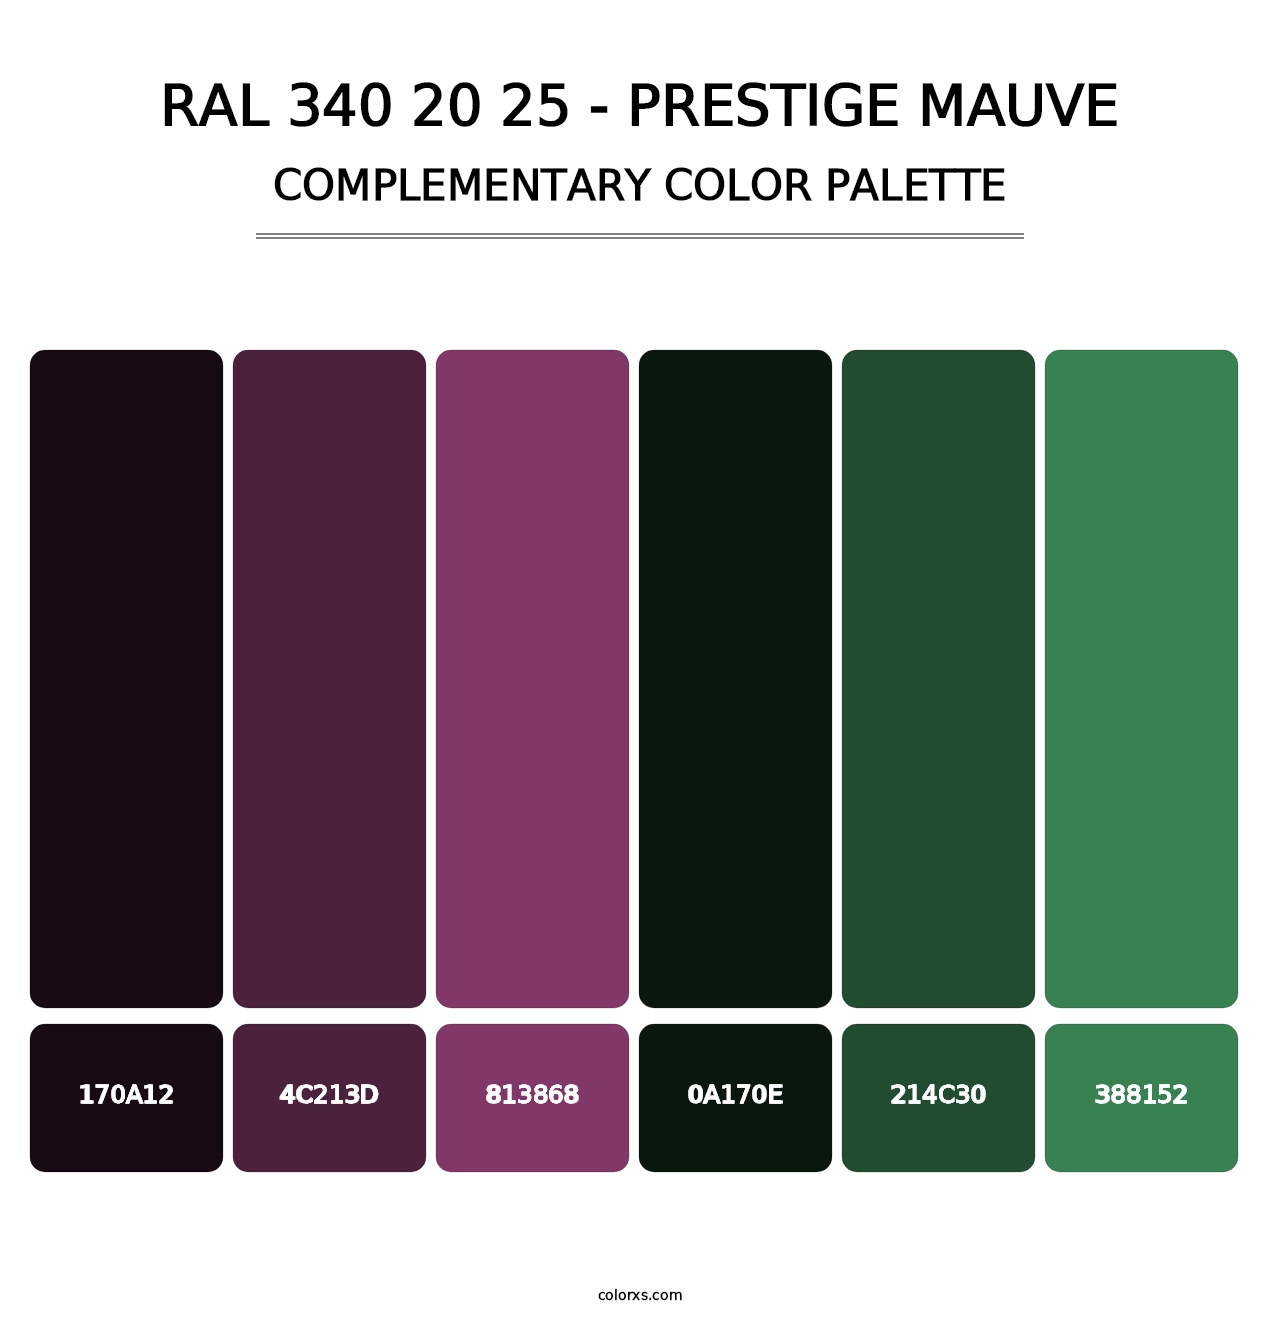 RAL 340 20 25 - Prestige Mauve - Complementary Color Palette